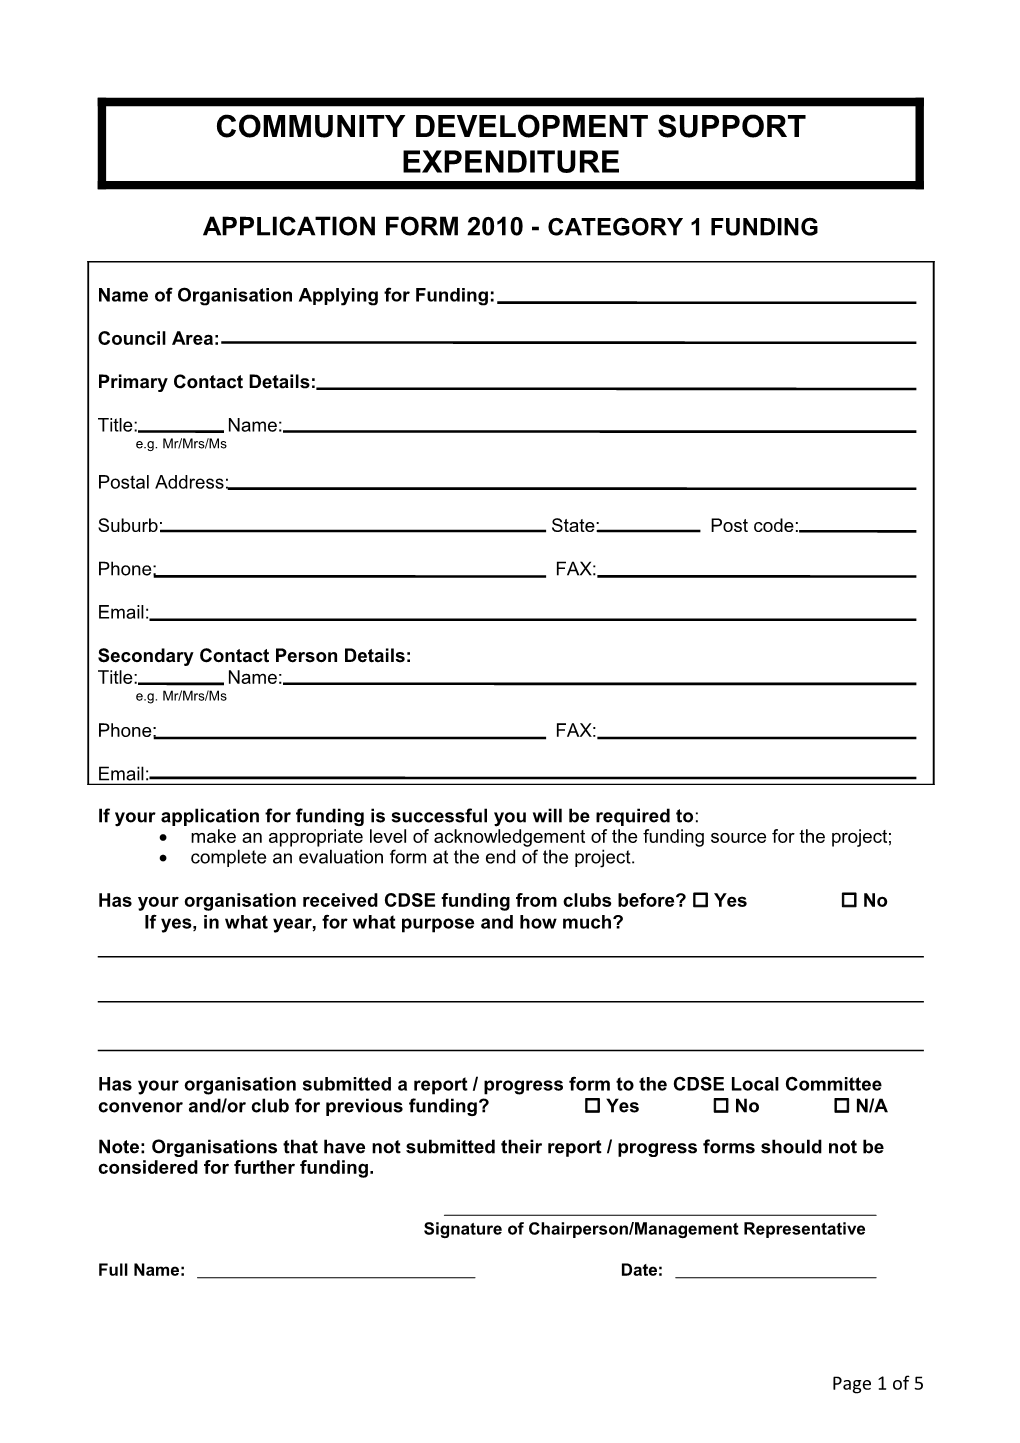 CDSE 2010 - Application Form